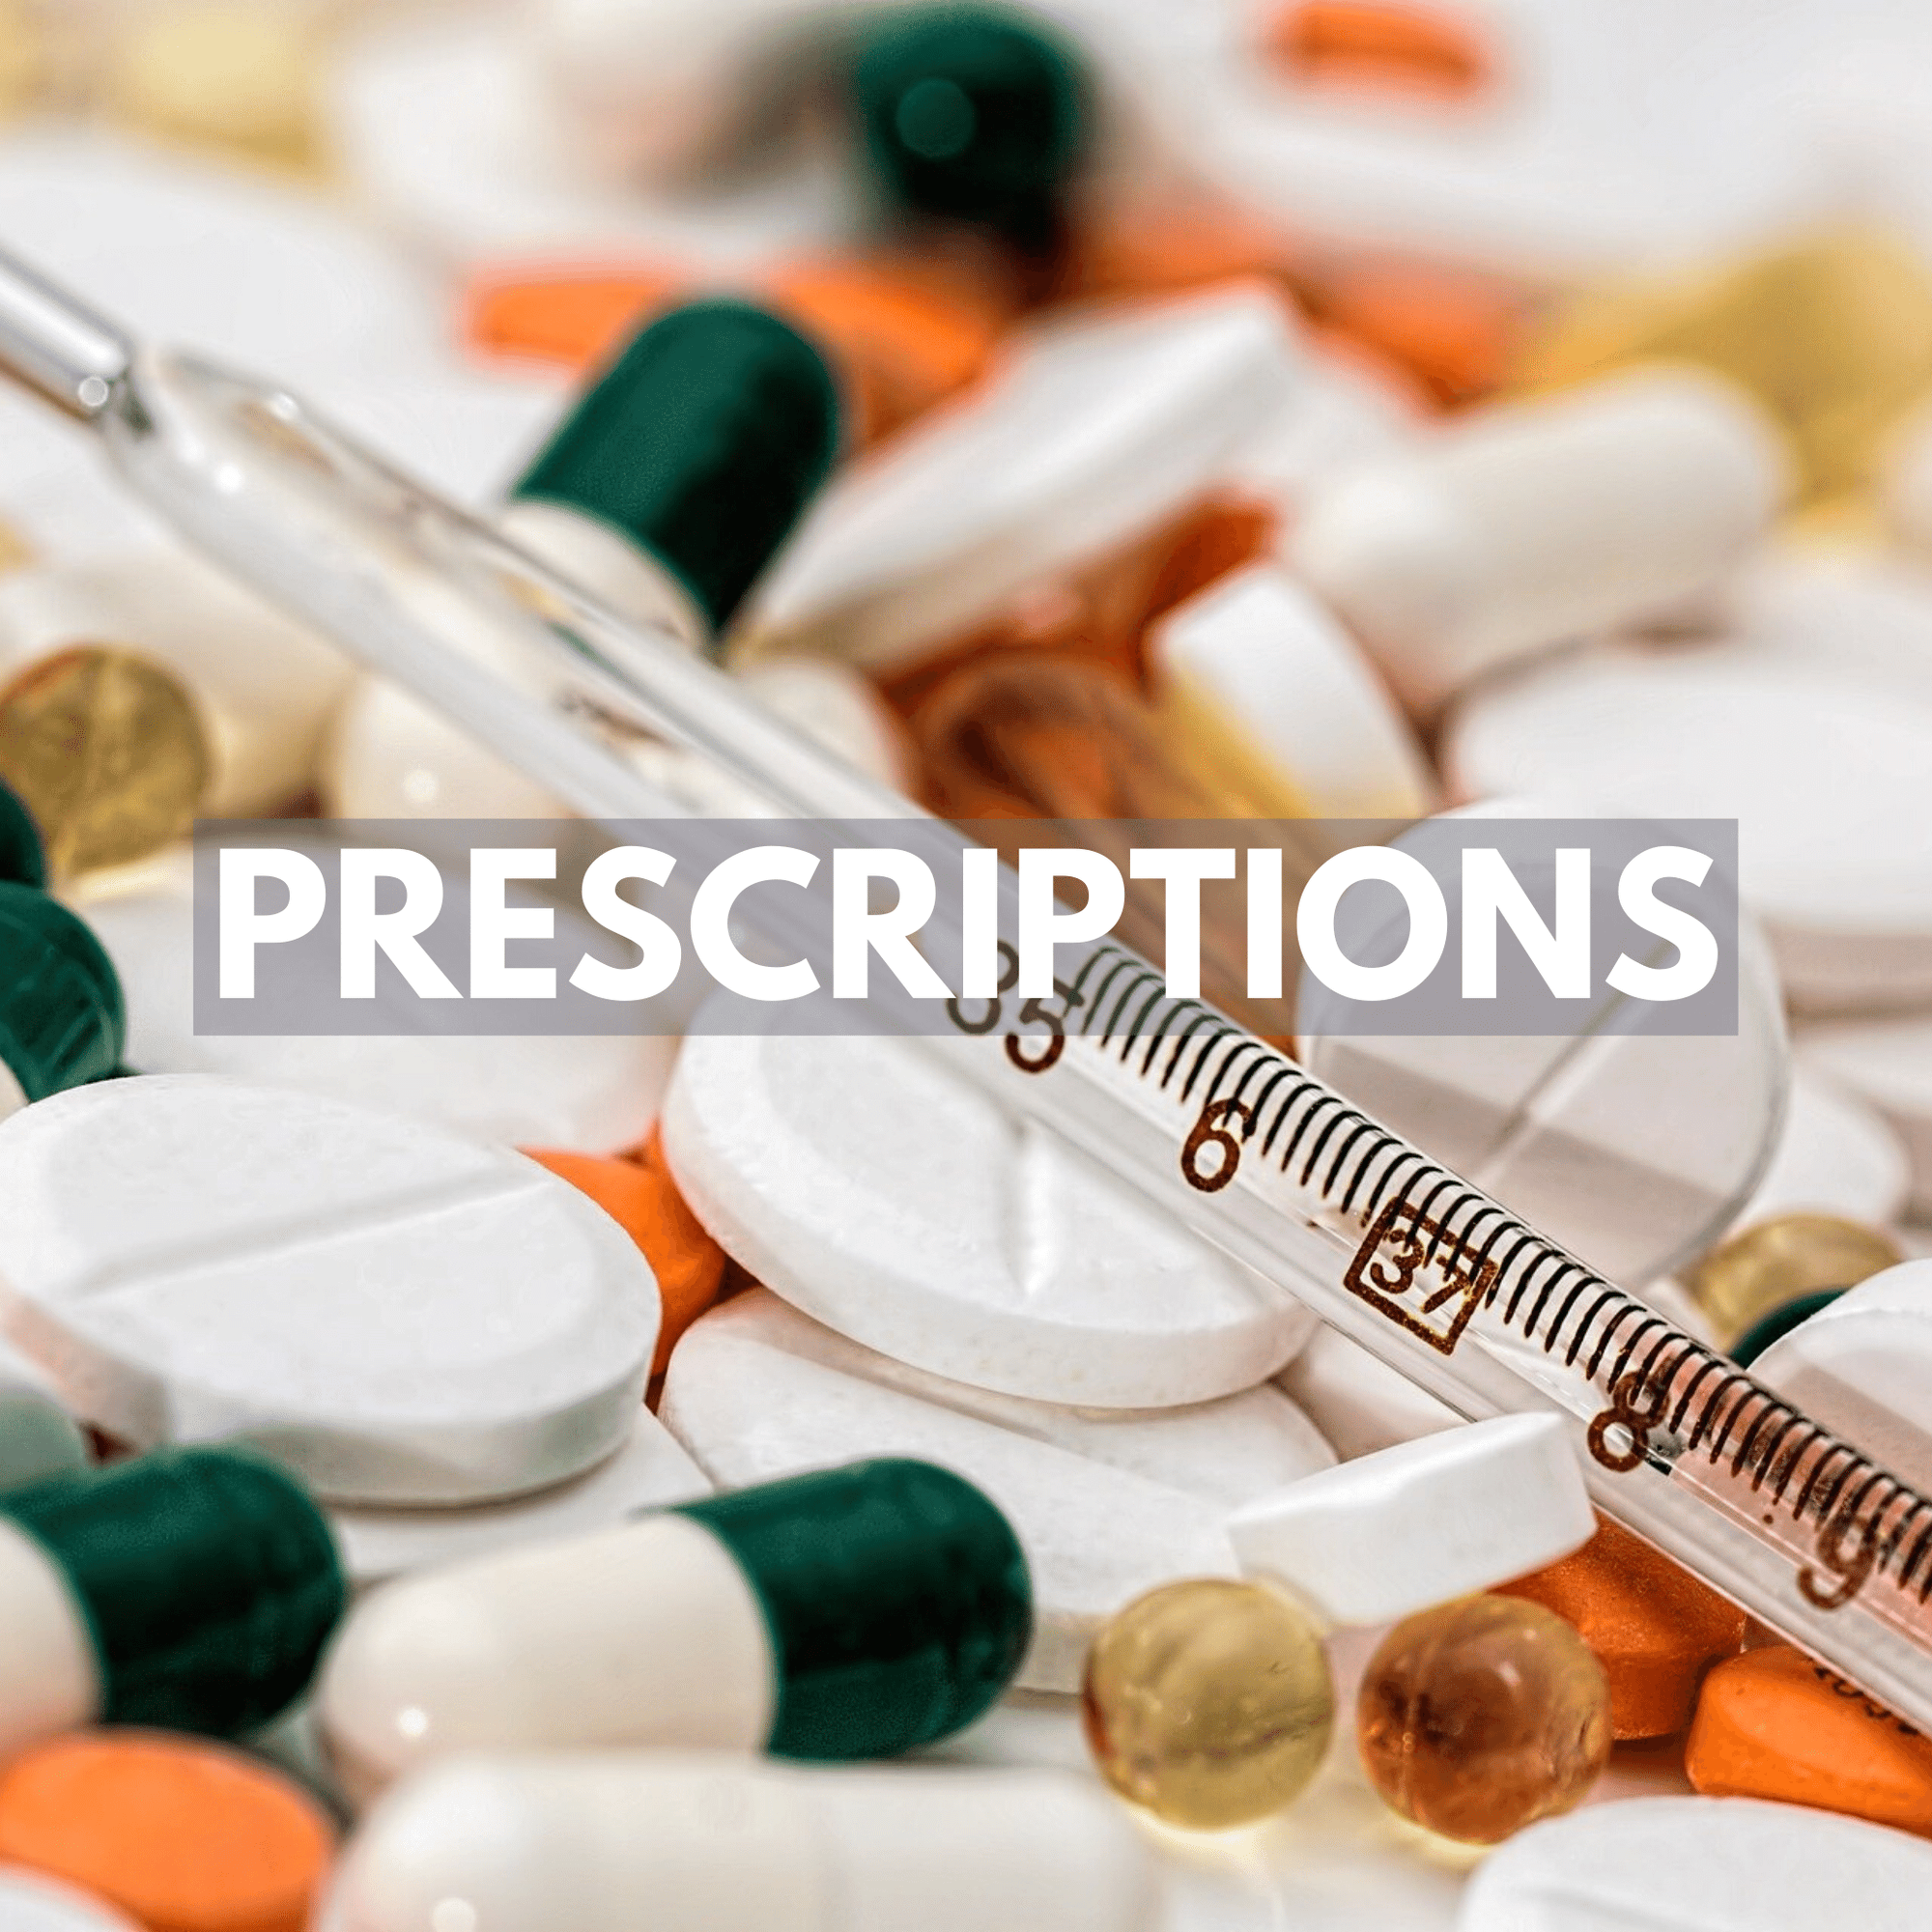 image of prescription drugs